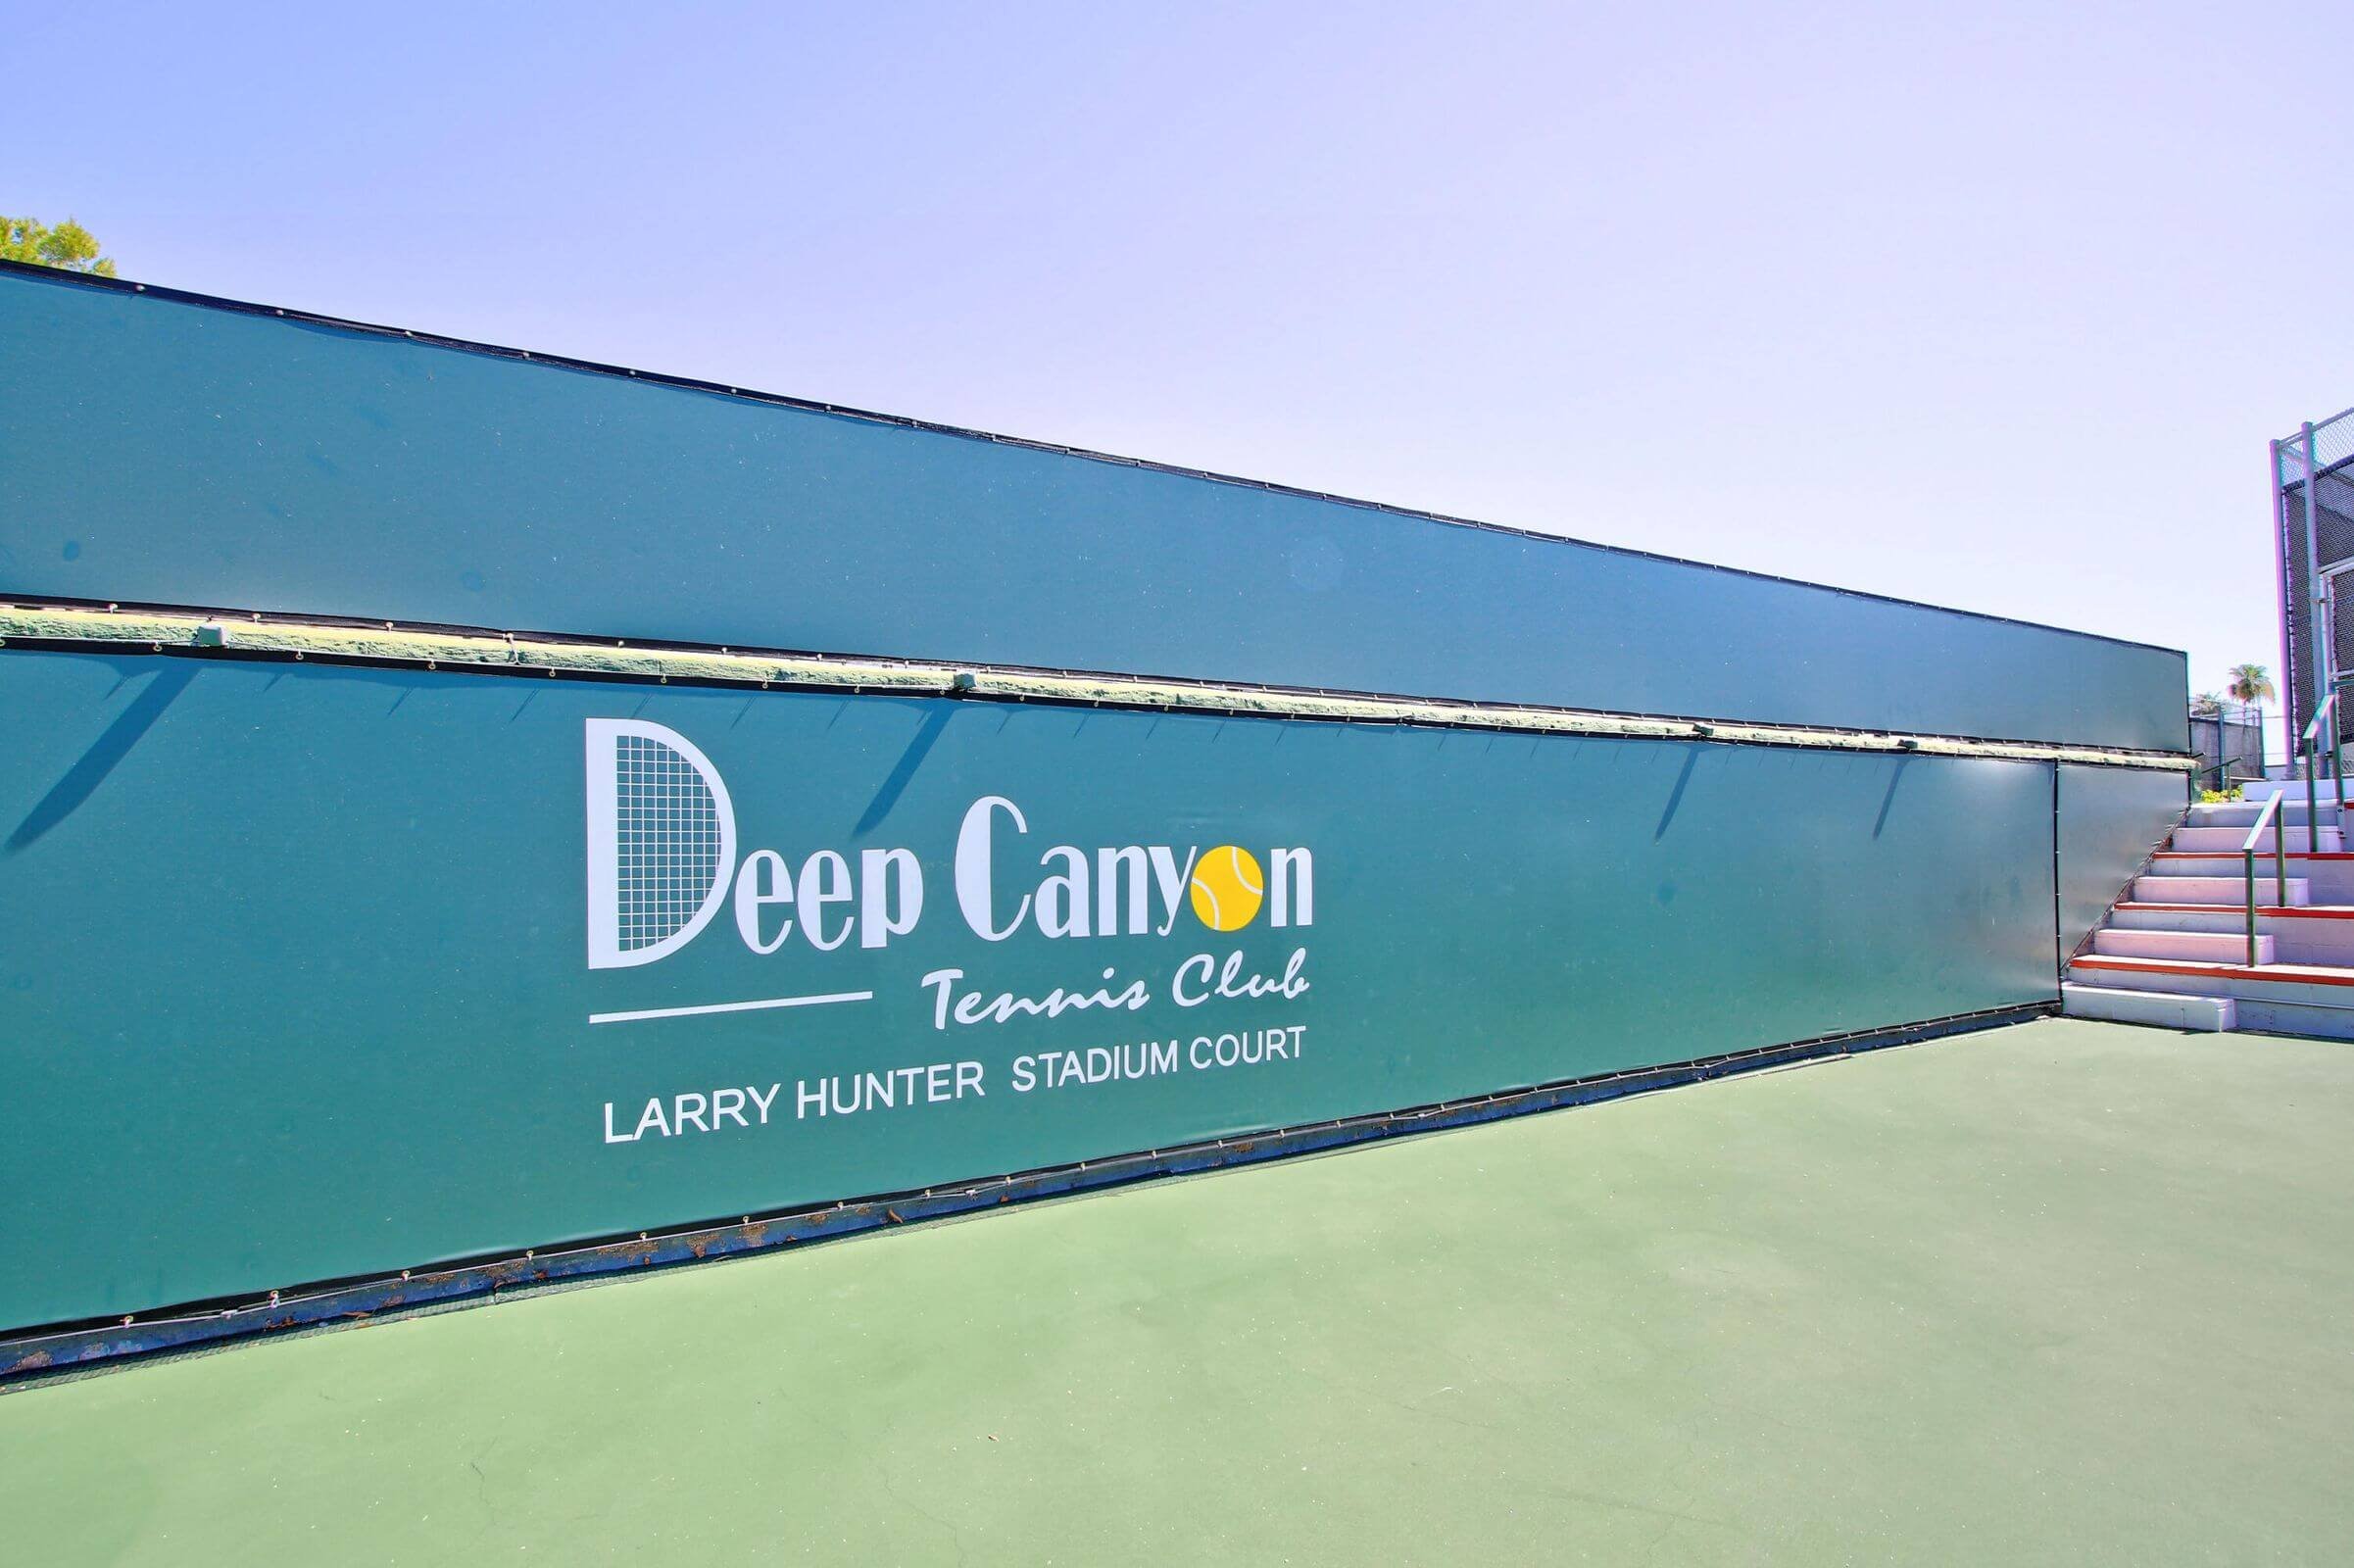 Deep Canyon Tennis Club